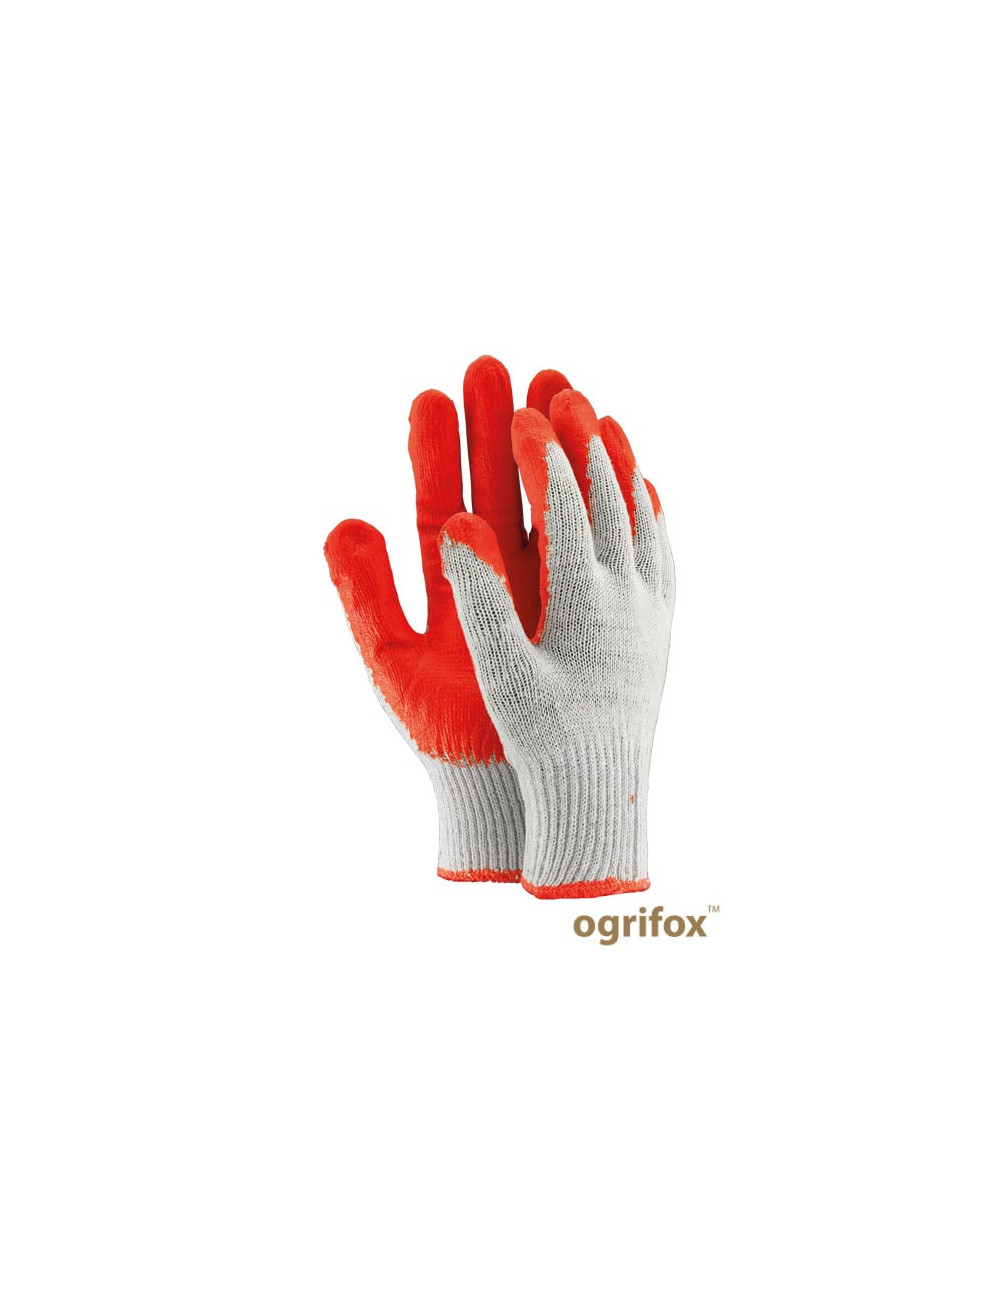 Gloves ox.11.121 uniwamp ox-uniwamp wc white-red Ogrifox